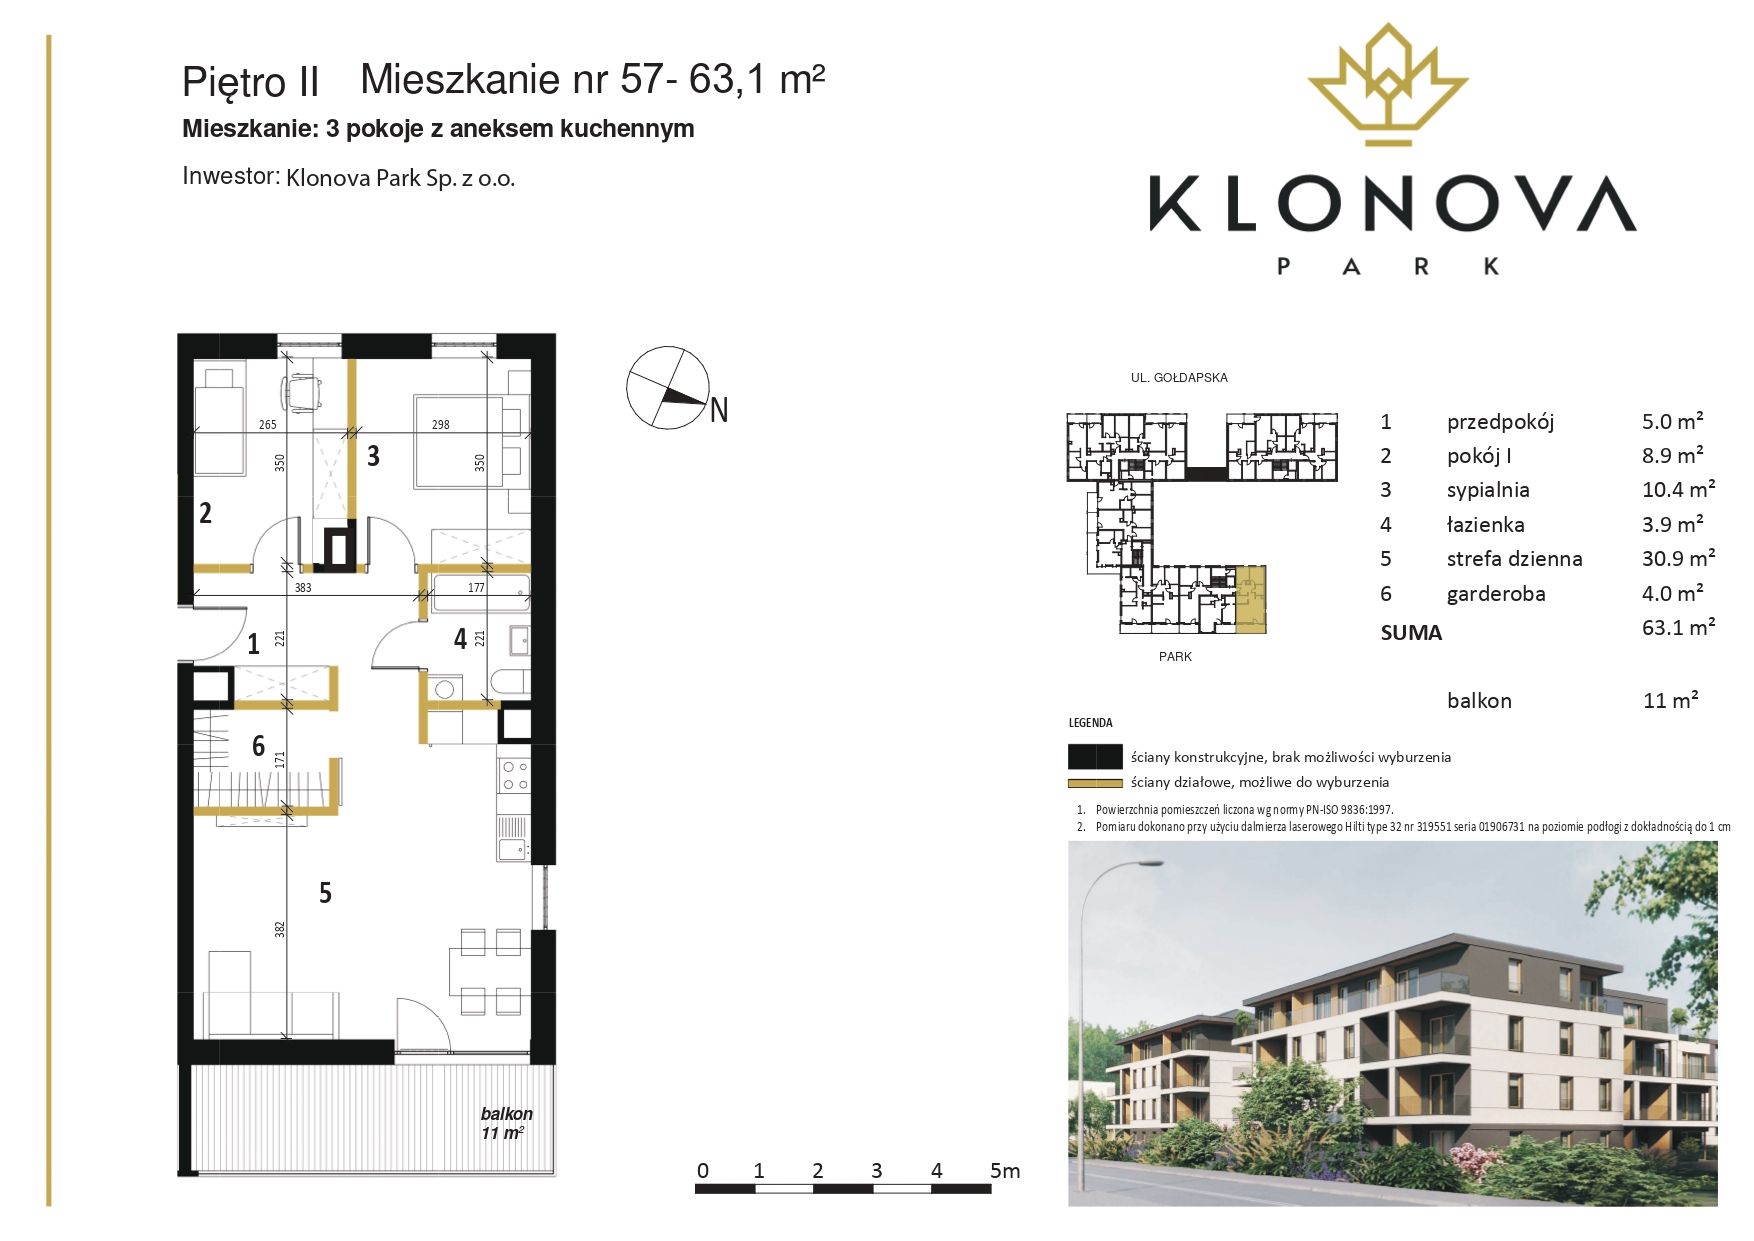 Apartamenty Klonova Park - Plan mieszkania 57